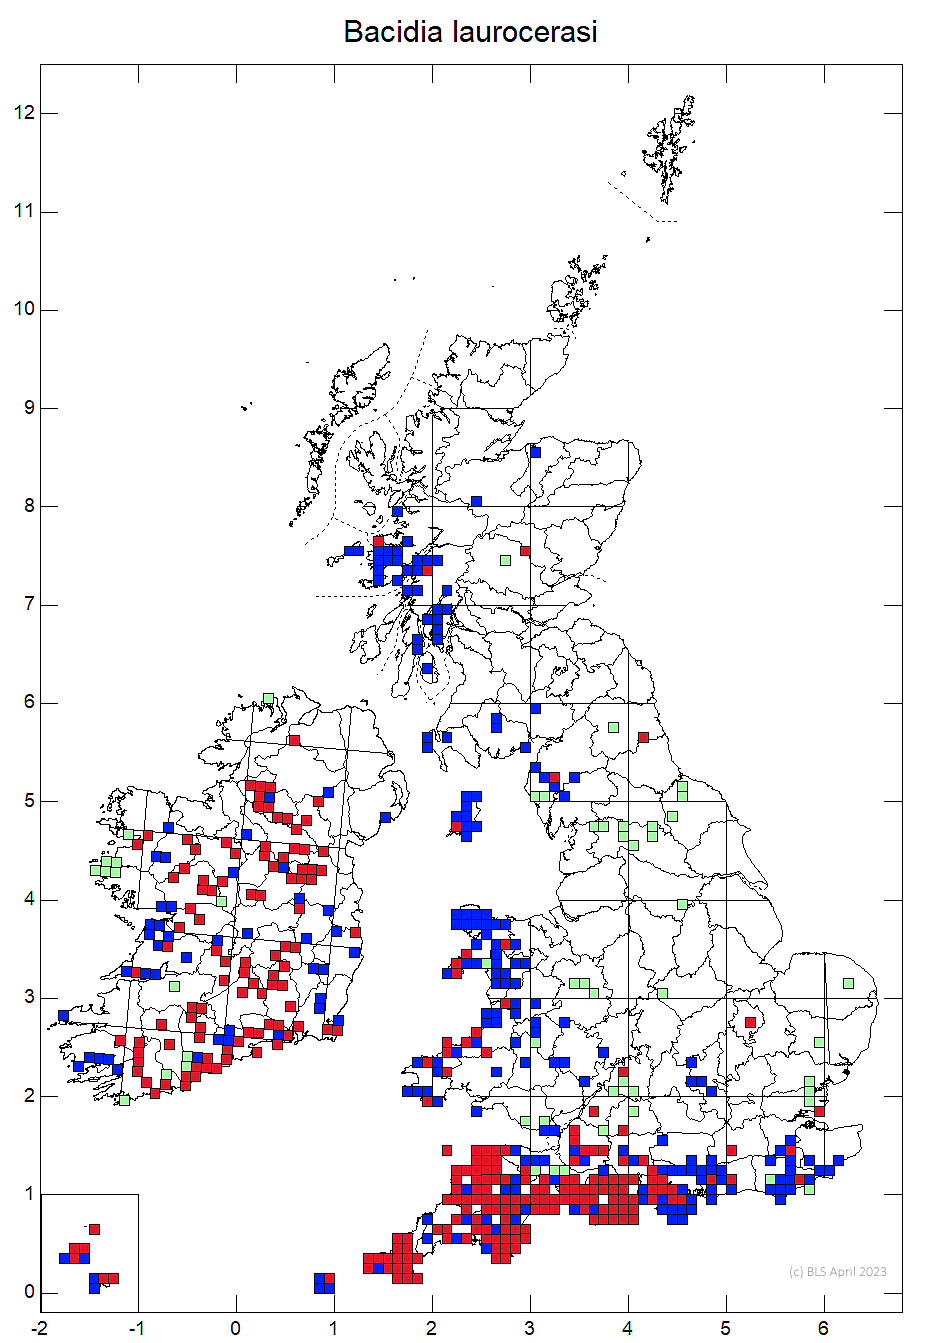 Bacidia laurocerasi 10km sq distribution map